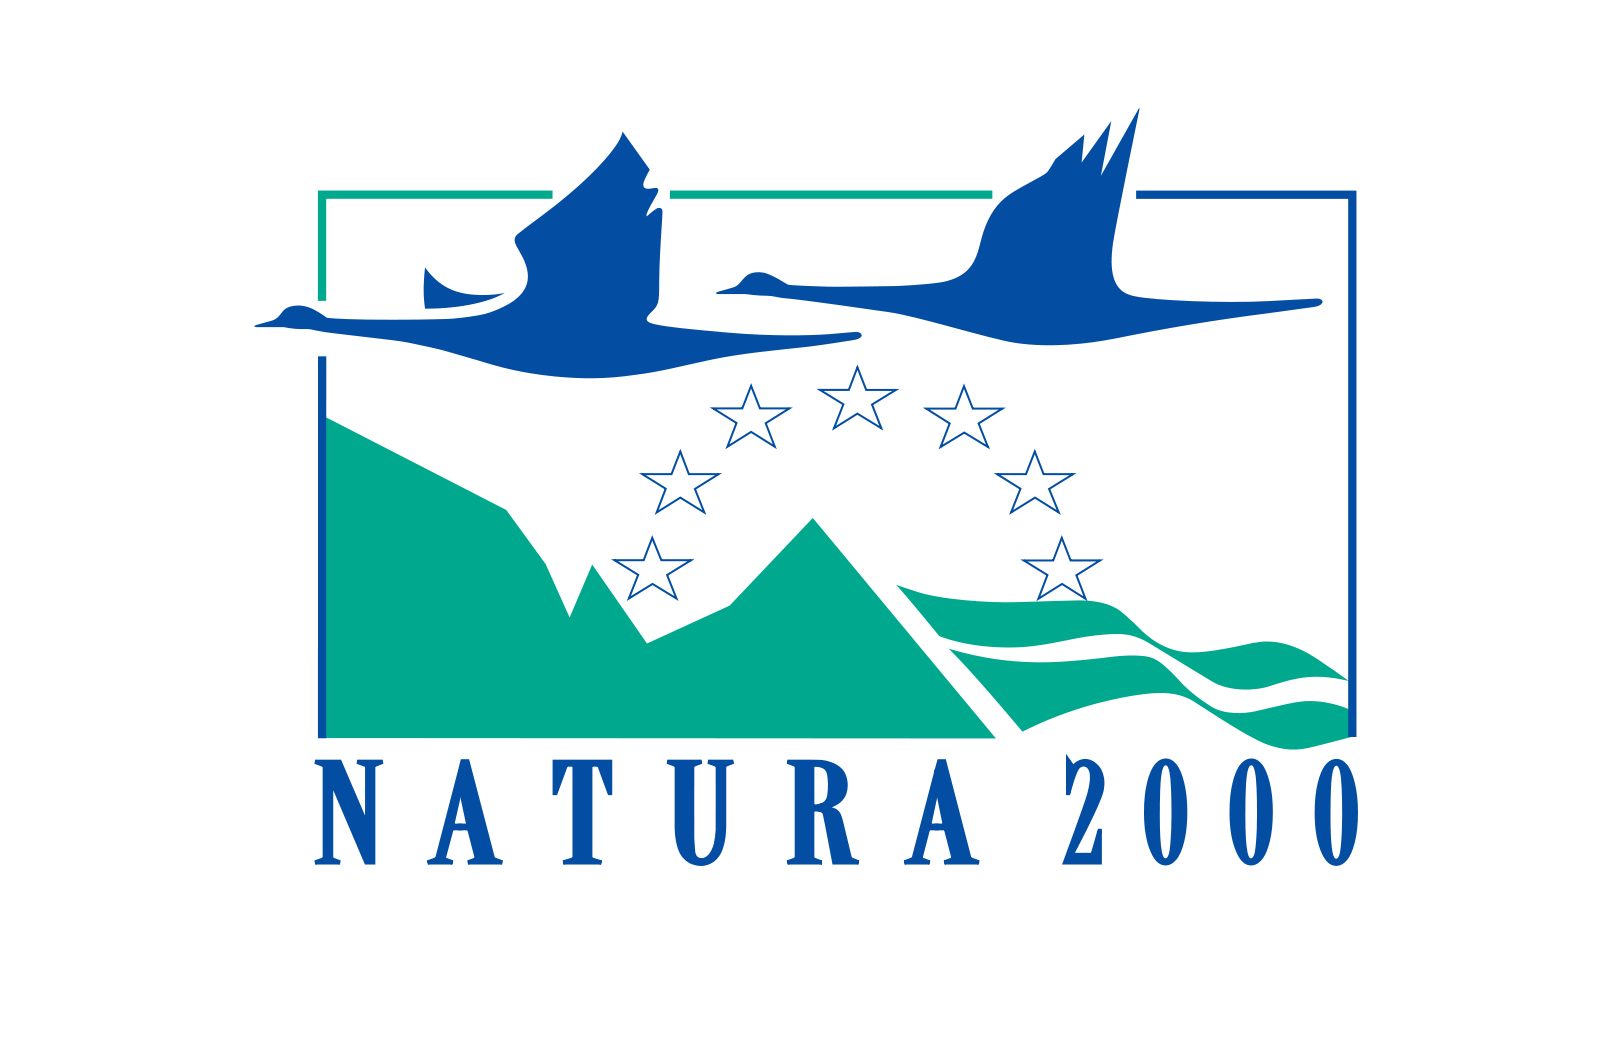 More information about "Ψηφιακό πιστοποιητικό για εκτάσεις σε Natura"